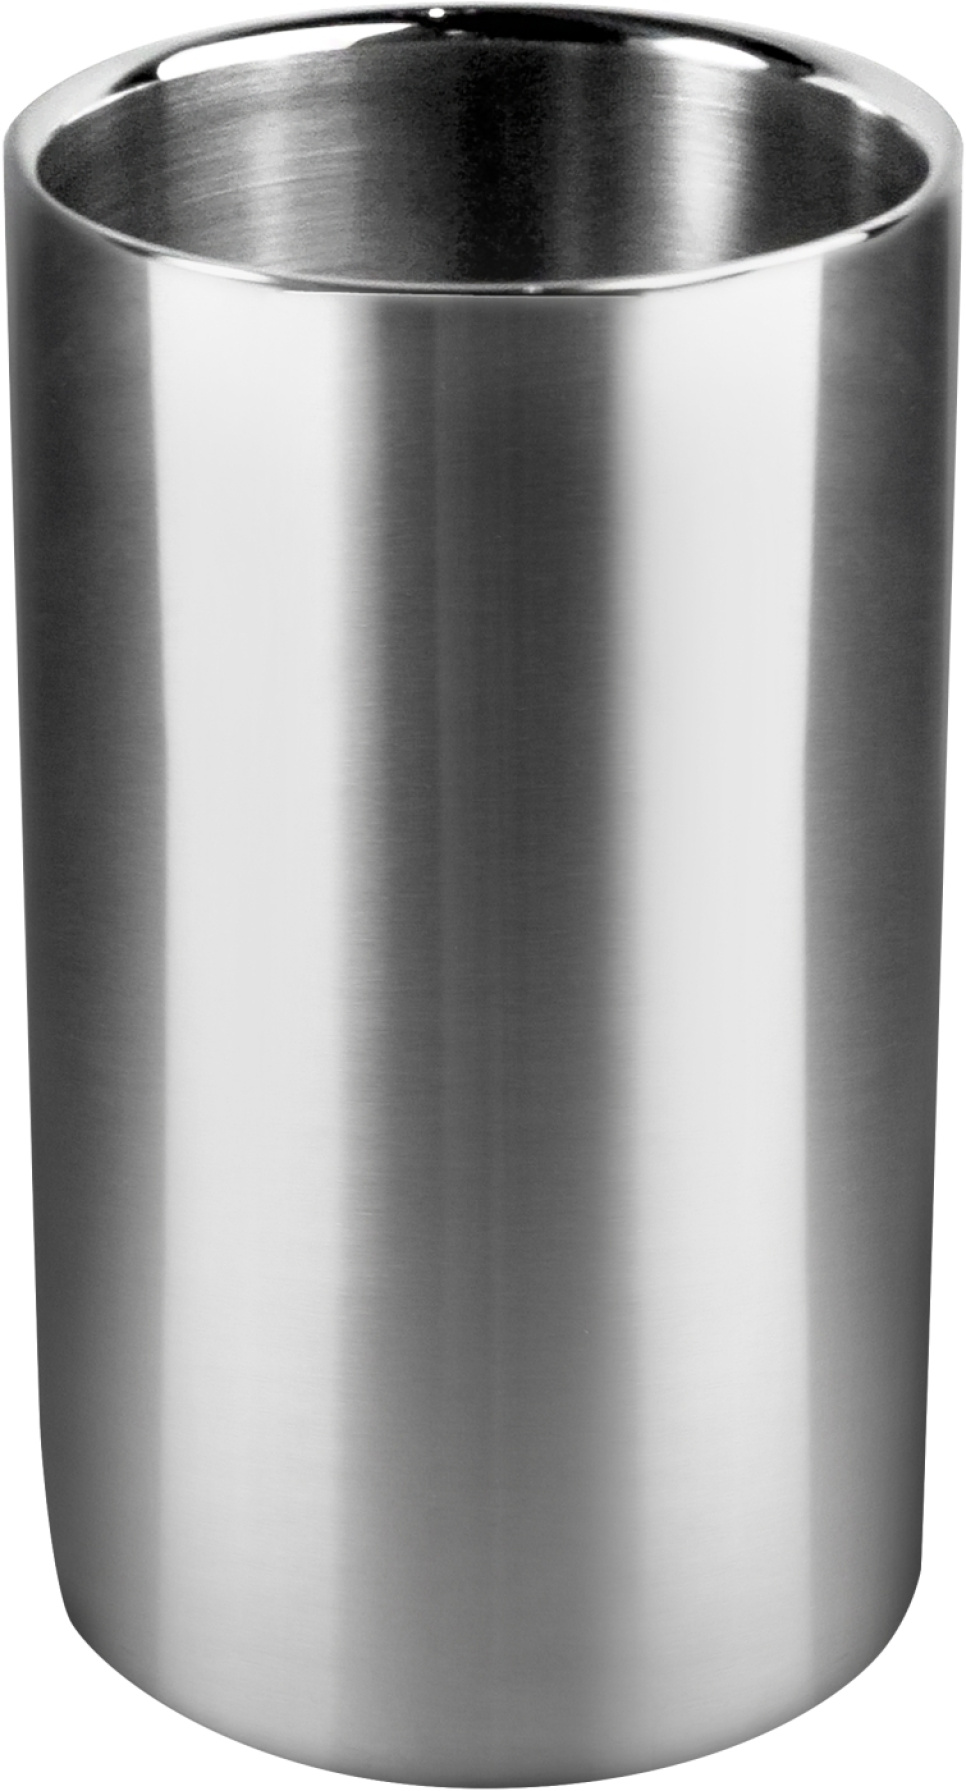 Vinkøler i rustfrit stål, Diameter 11,7 cm - Exxent i gruppen Bar & Vin / Vin tilbehør / Isspande og vinkølere hos The Kitchen Lab (1071-10057)